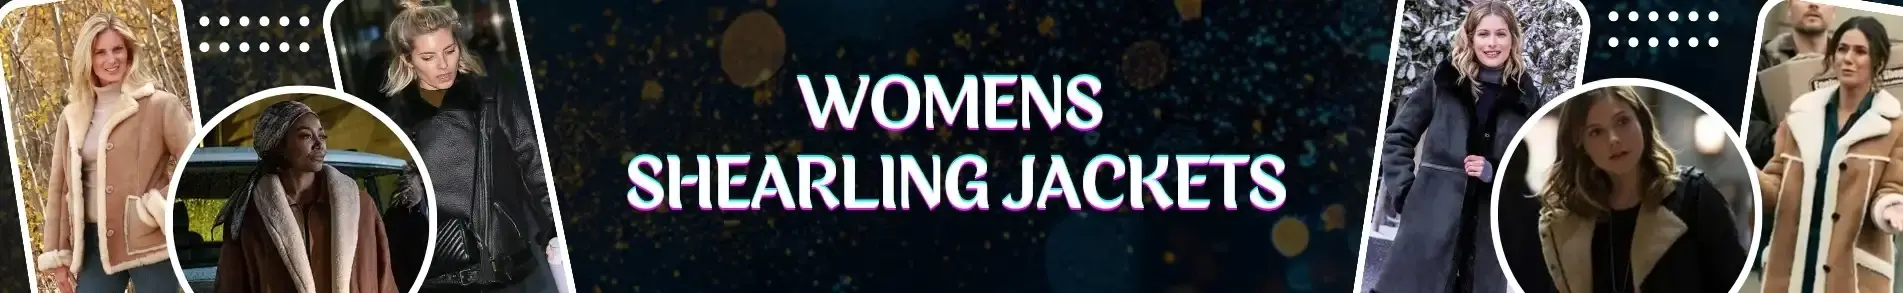 Womens Shearling Jackets